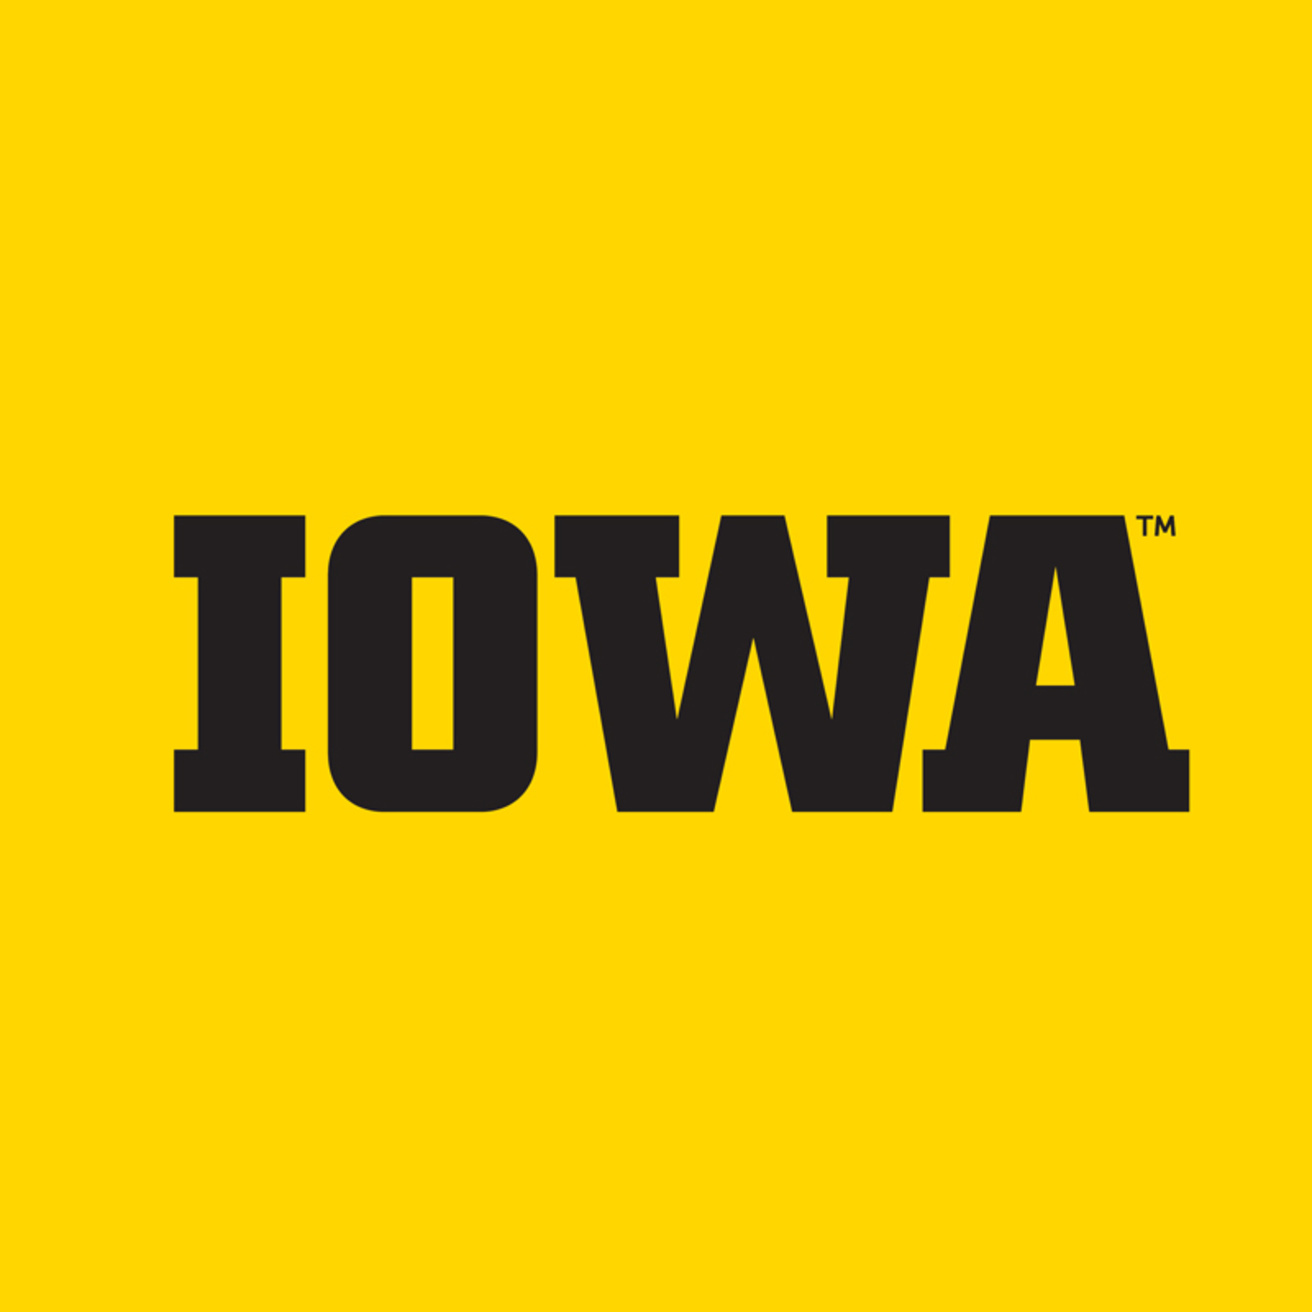 Iowa logo yellow background black letters